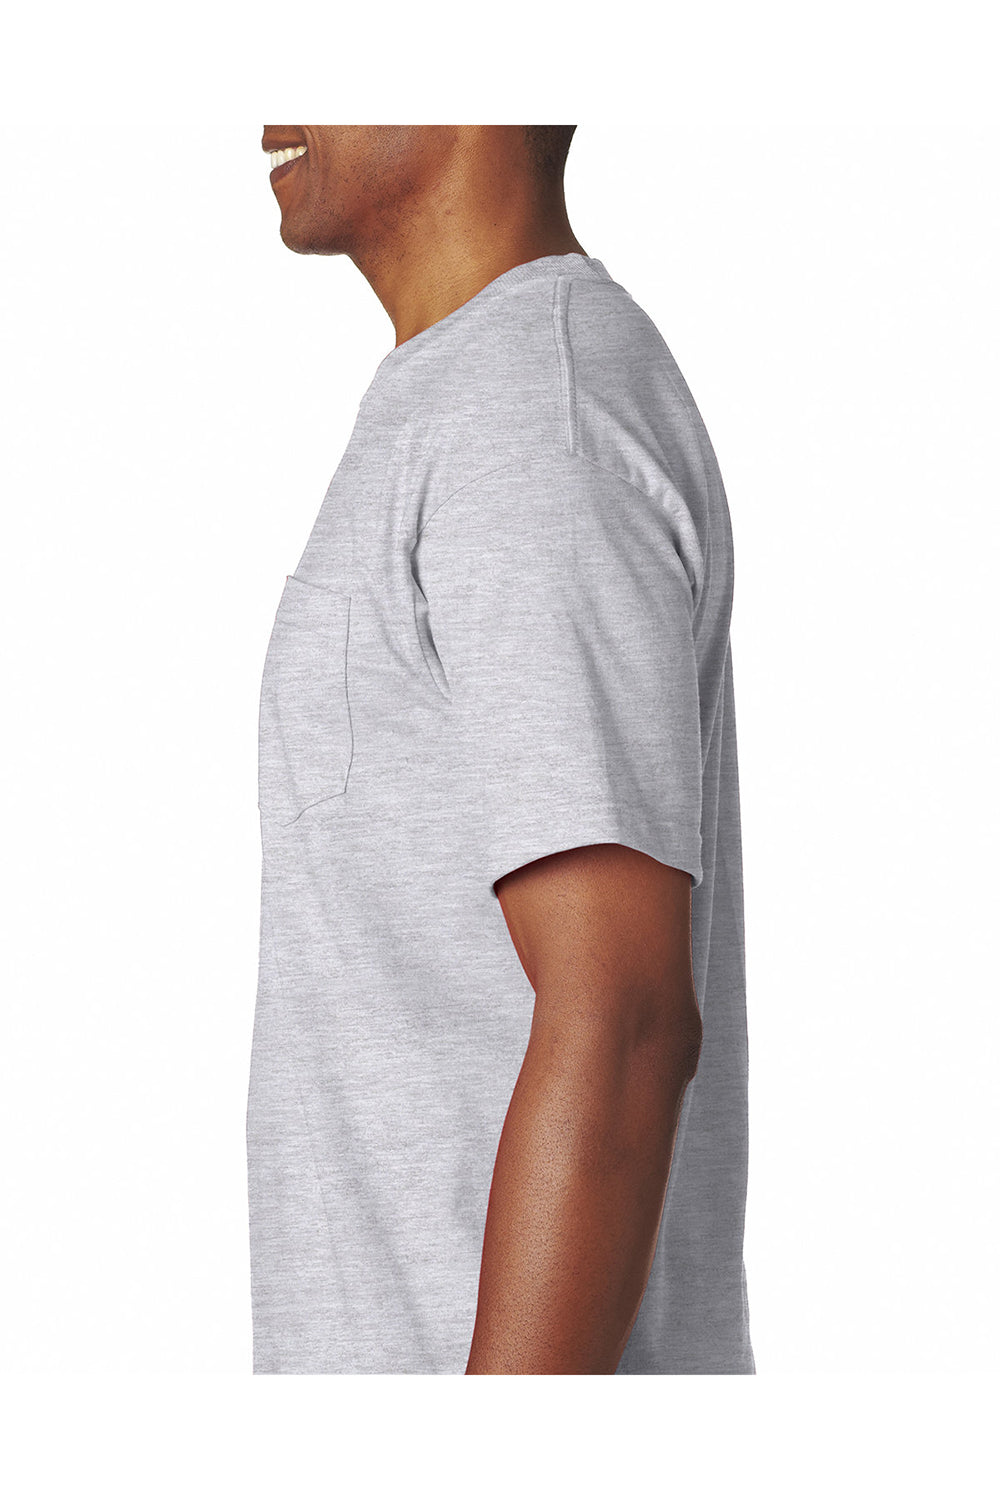 Bayside BA7100 Mens USA Made Short Sleeve Crewneck T-Shirt w/ Pocket Ash Grey Model Side